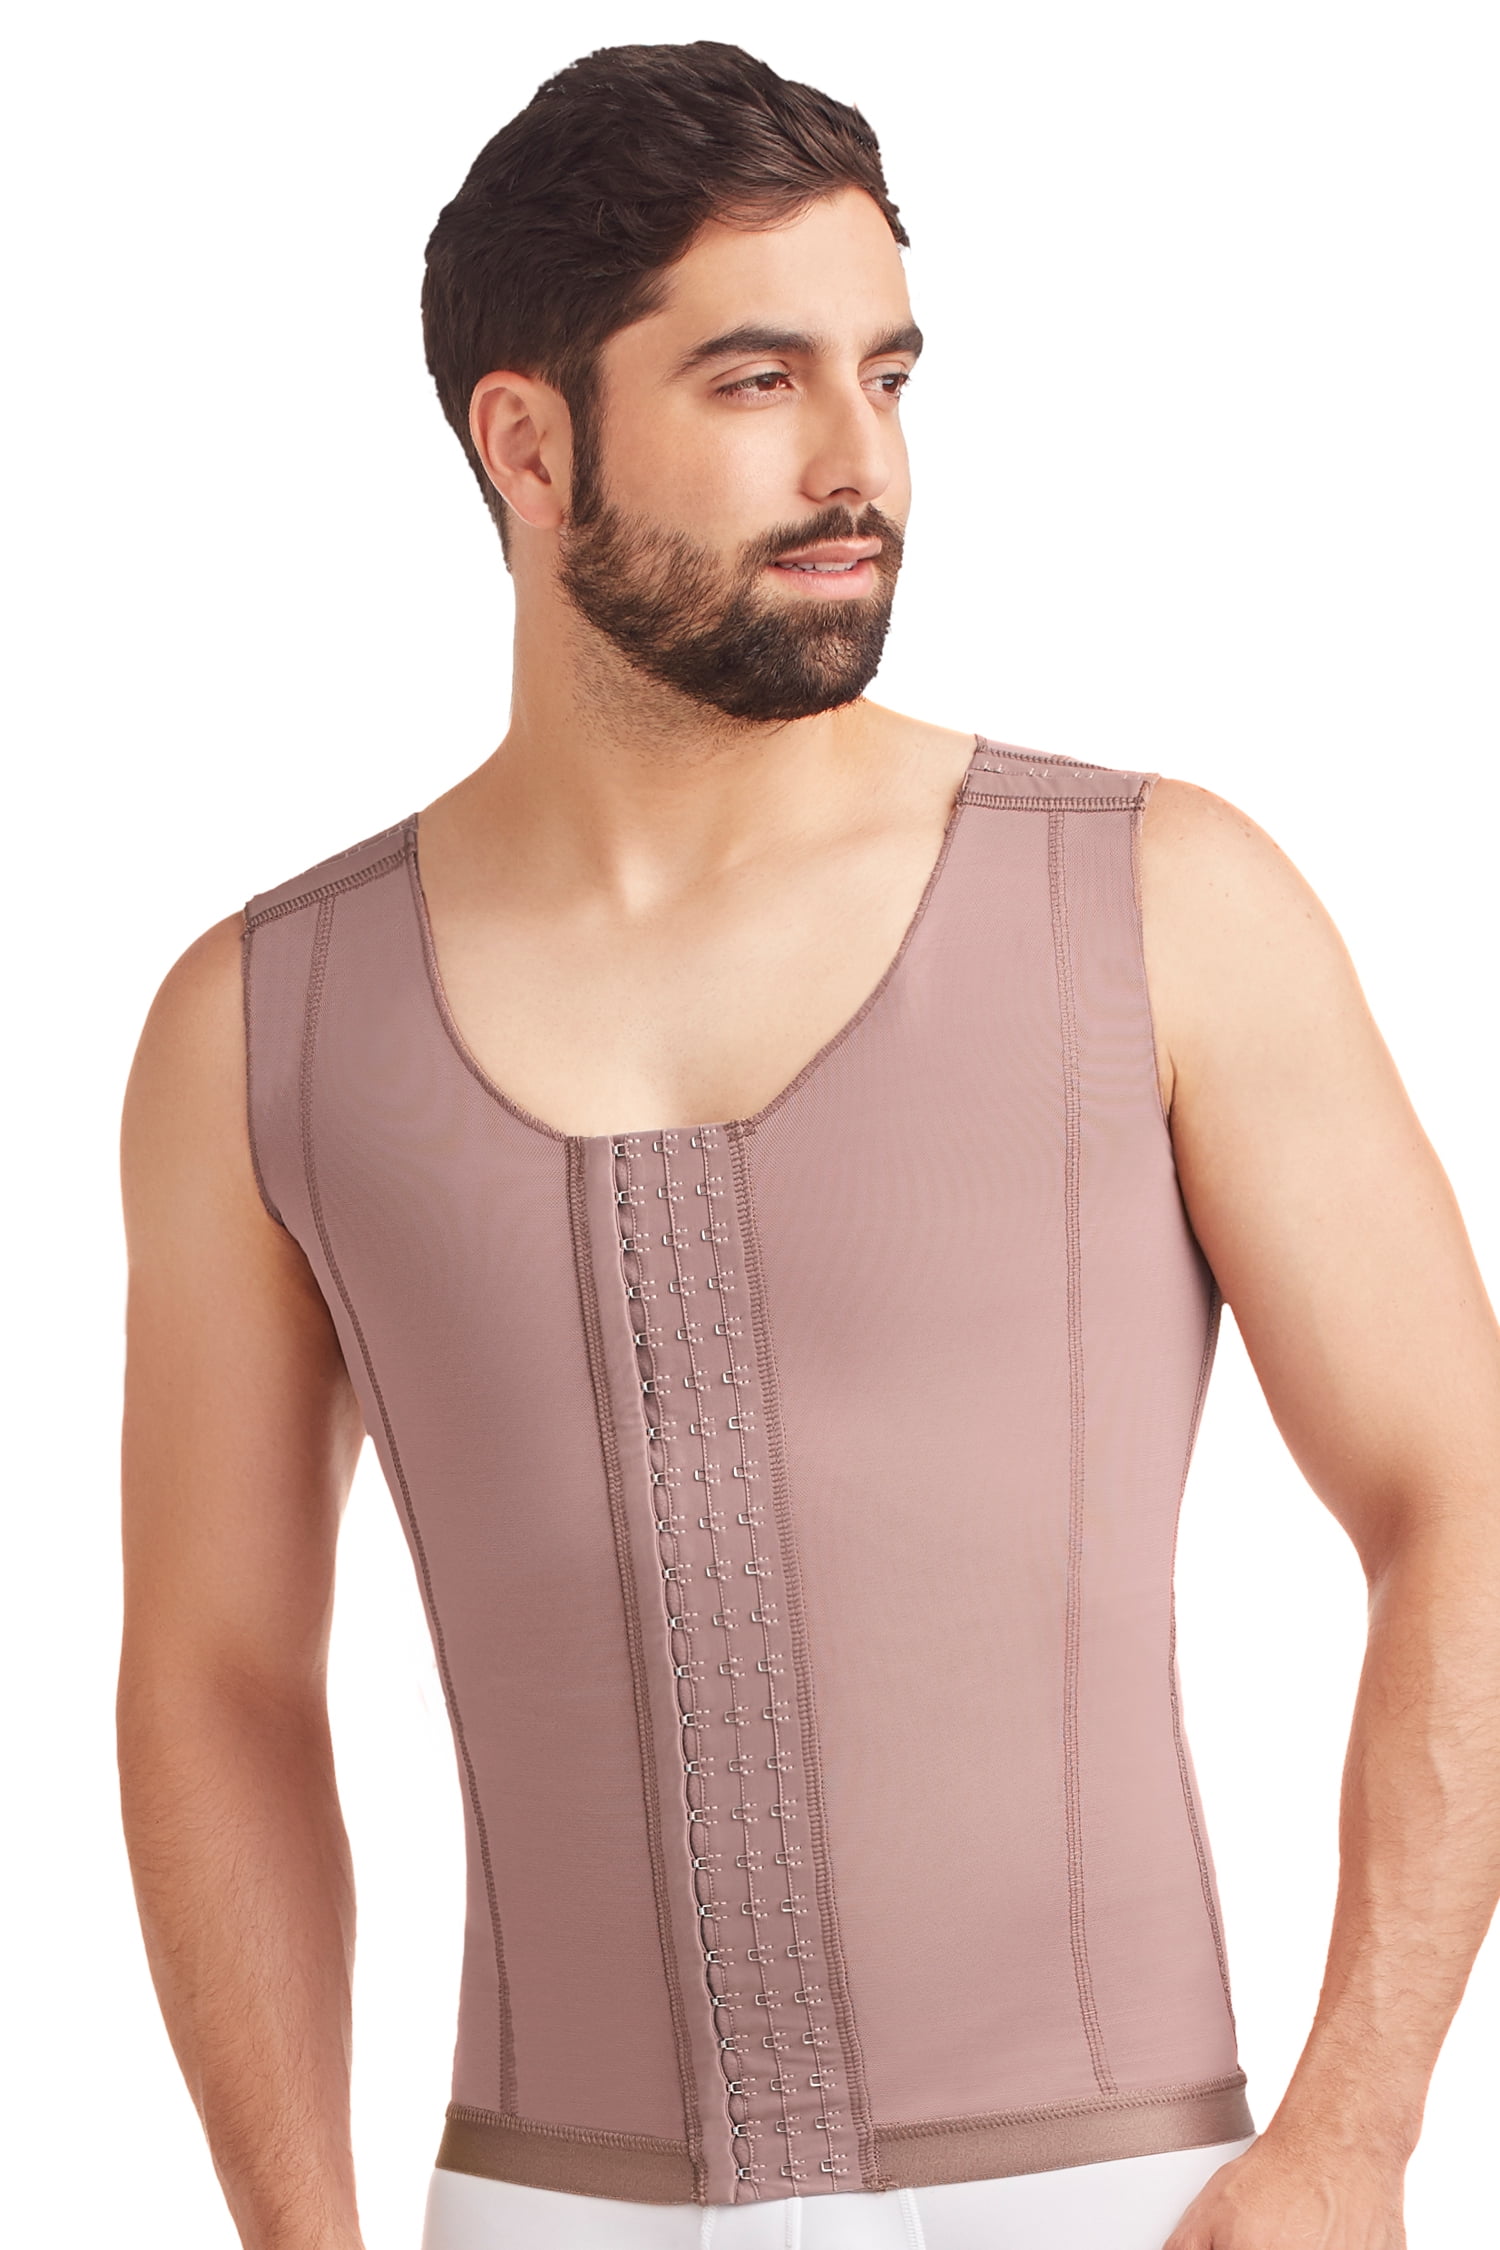 Delie by Fajas D'Prada  Compression garment, Post surgical compression  garments, Lower abdomen